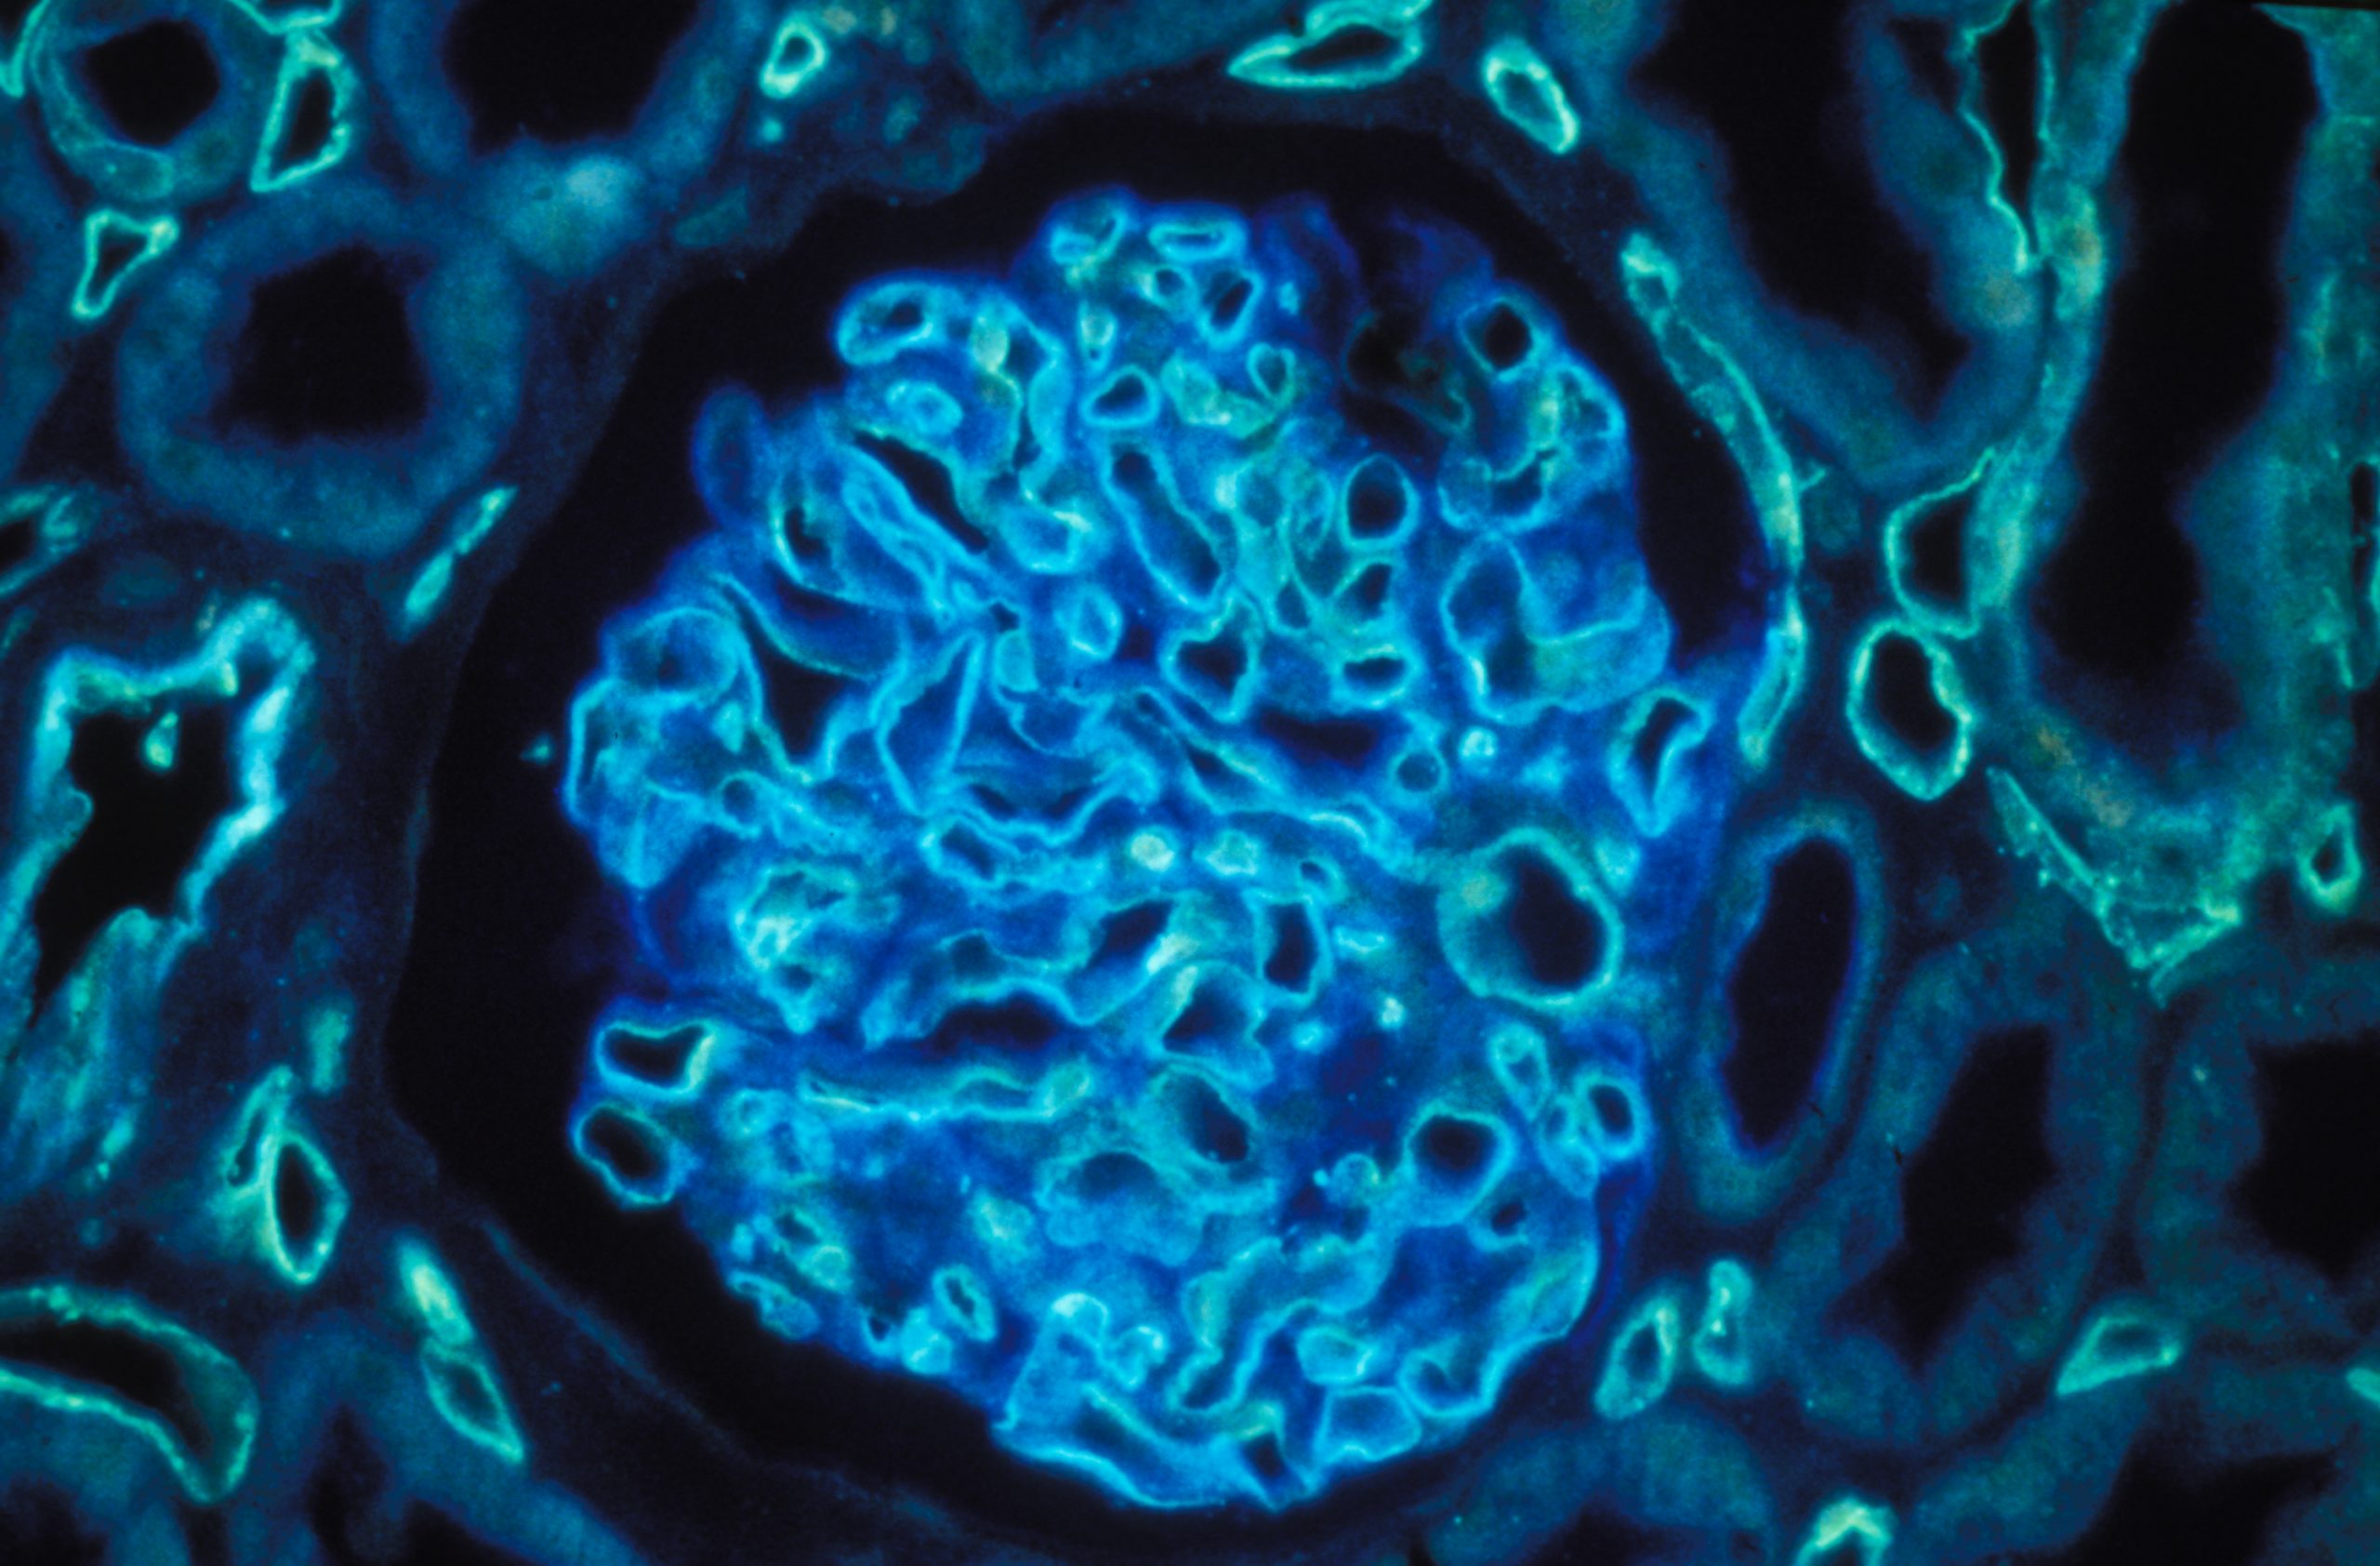 Coupe de rein humain grossie 400 fois par un microscope à immunofluorescence polychromatique